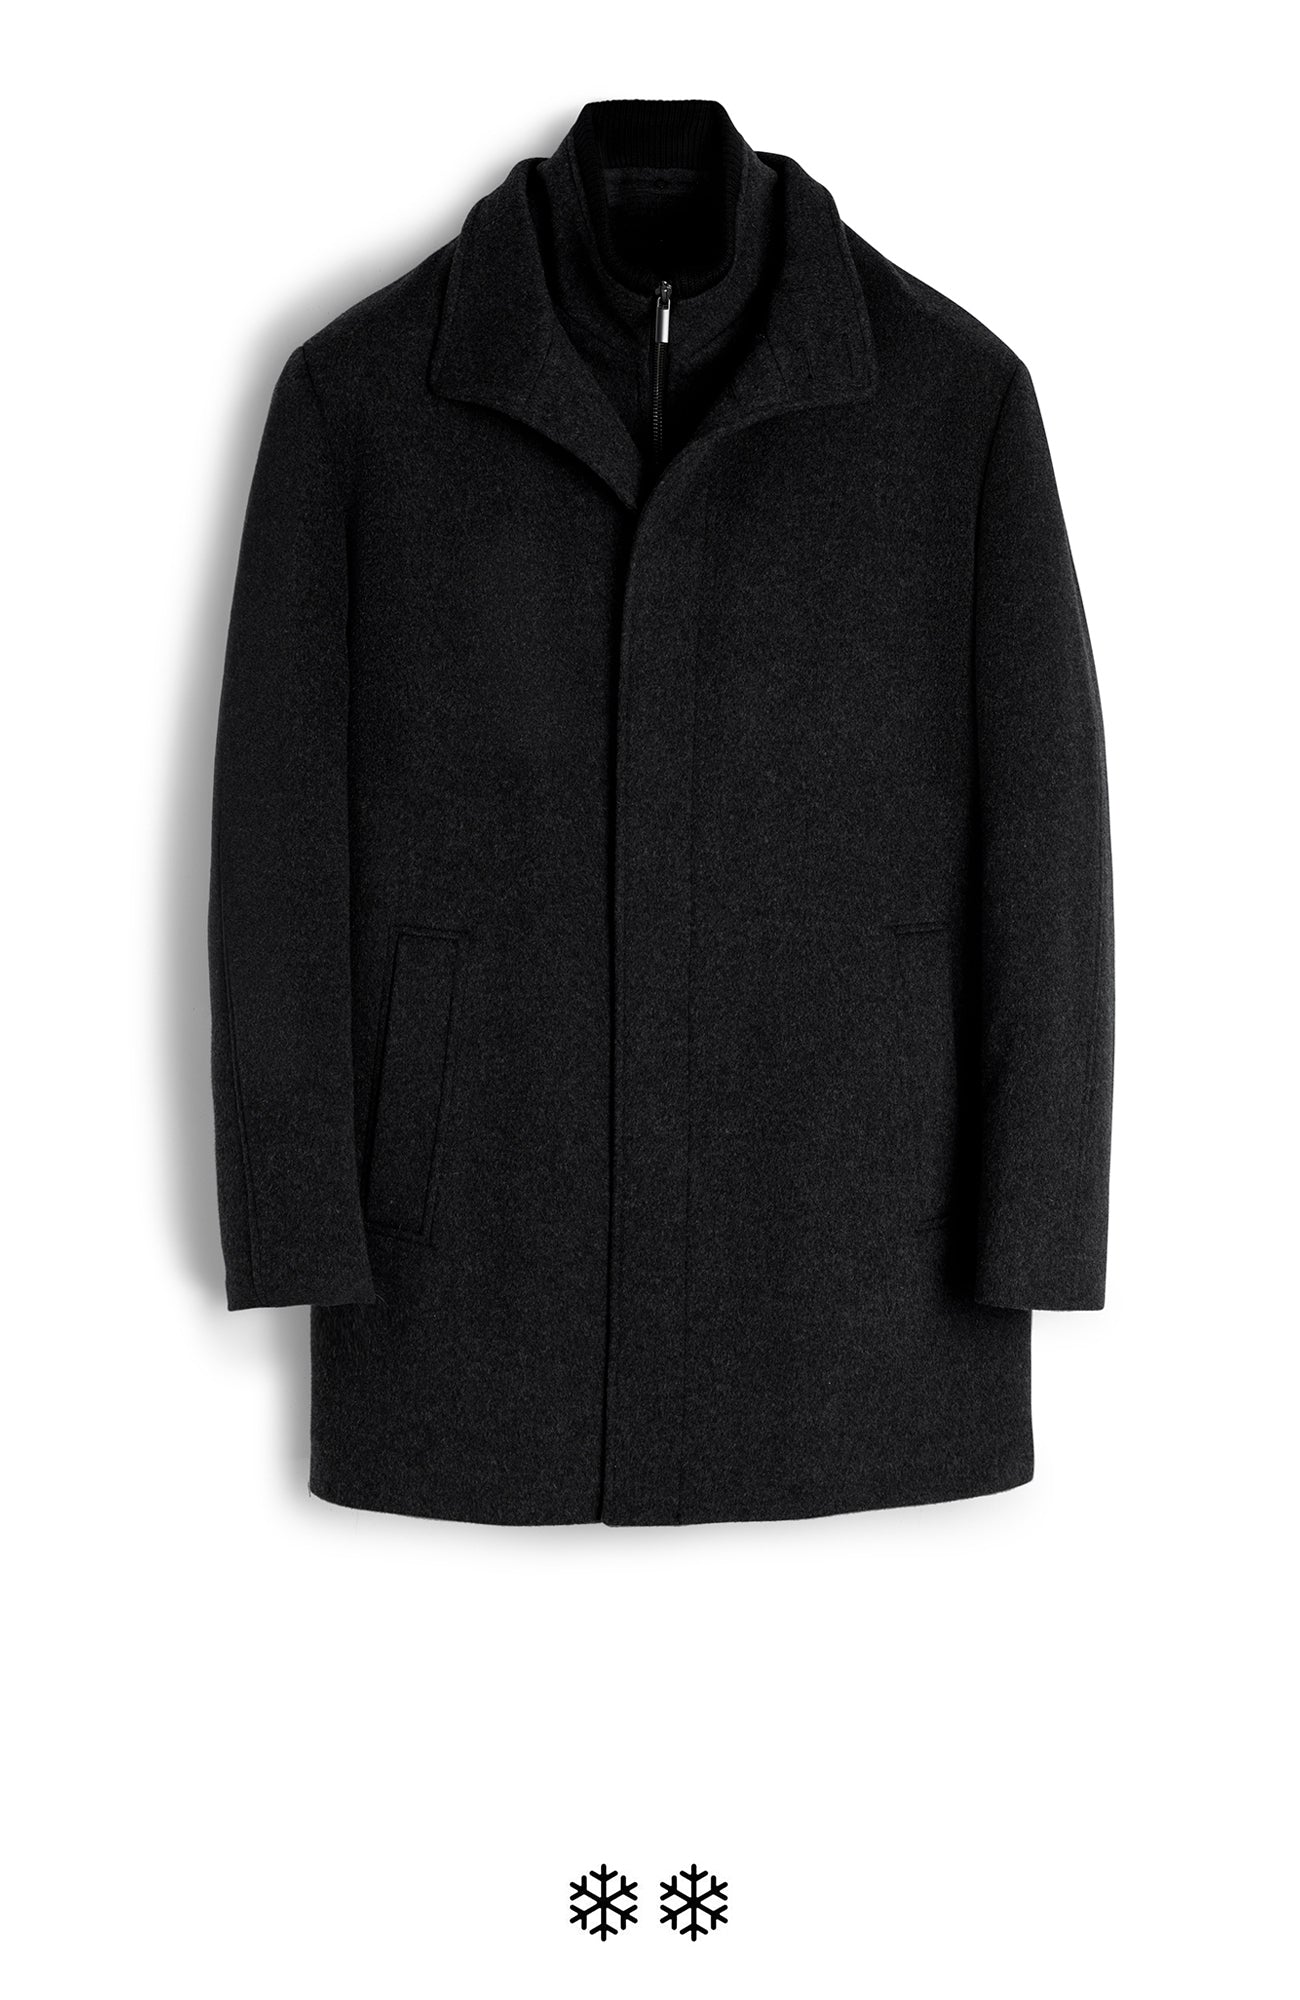 MONT-ROYAL BLACK WOOL & CASHMERE CAR COAT - Cardinal of Canada-CA - Mont-Royal black wool cashmere car coat 34 inch length